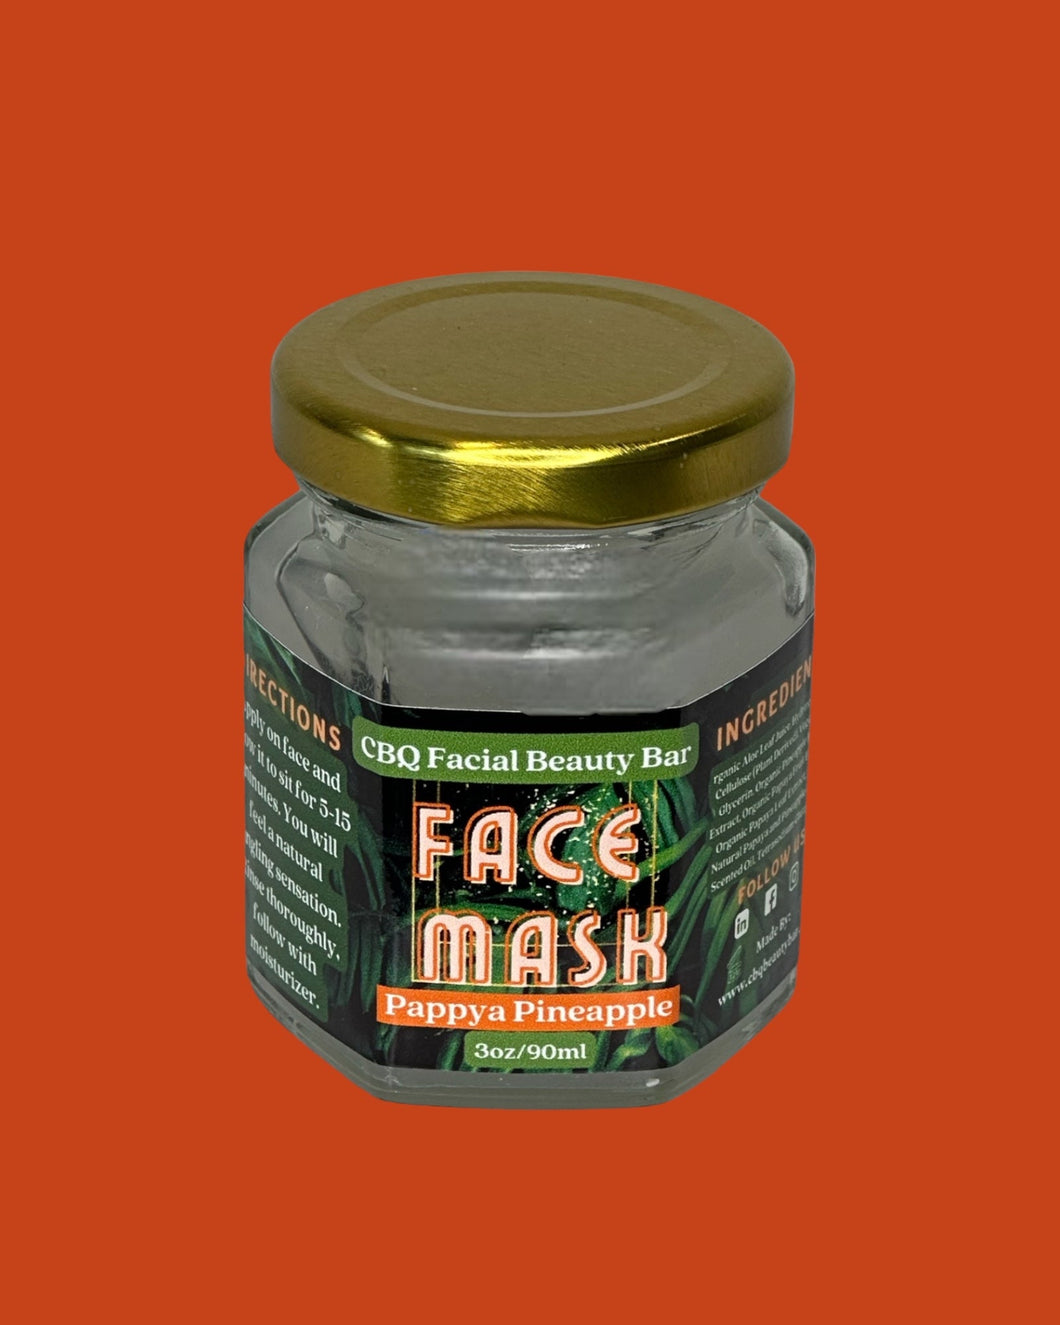 Papaya Pineapple Face Mask